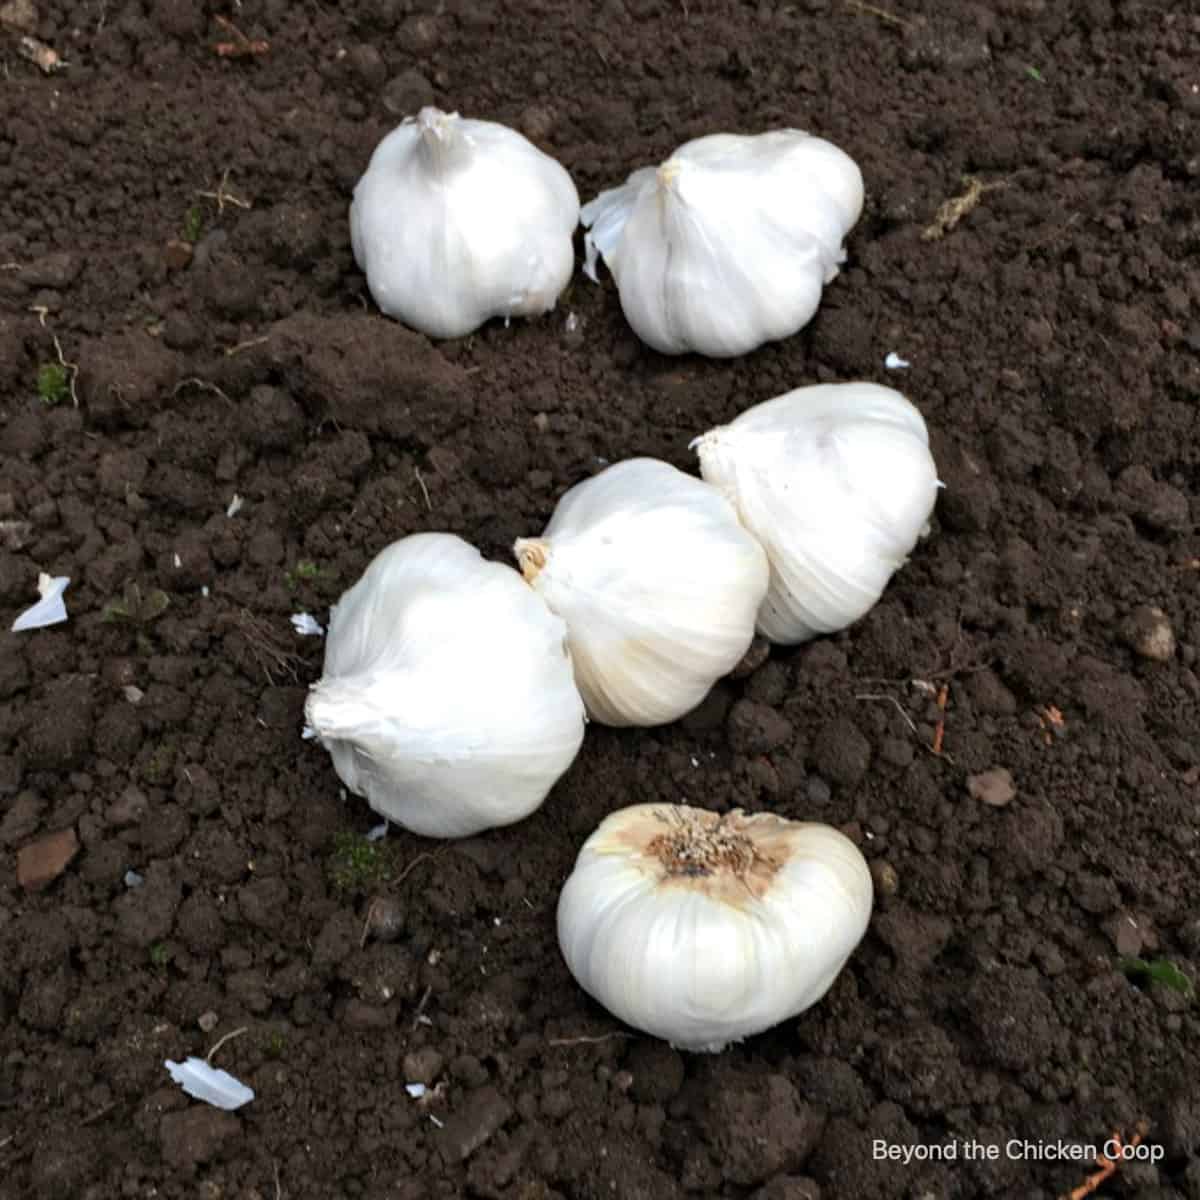 Heads of garlic on soil.